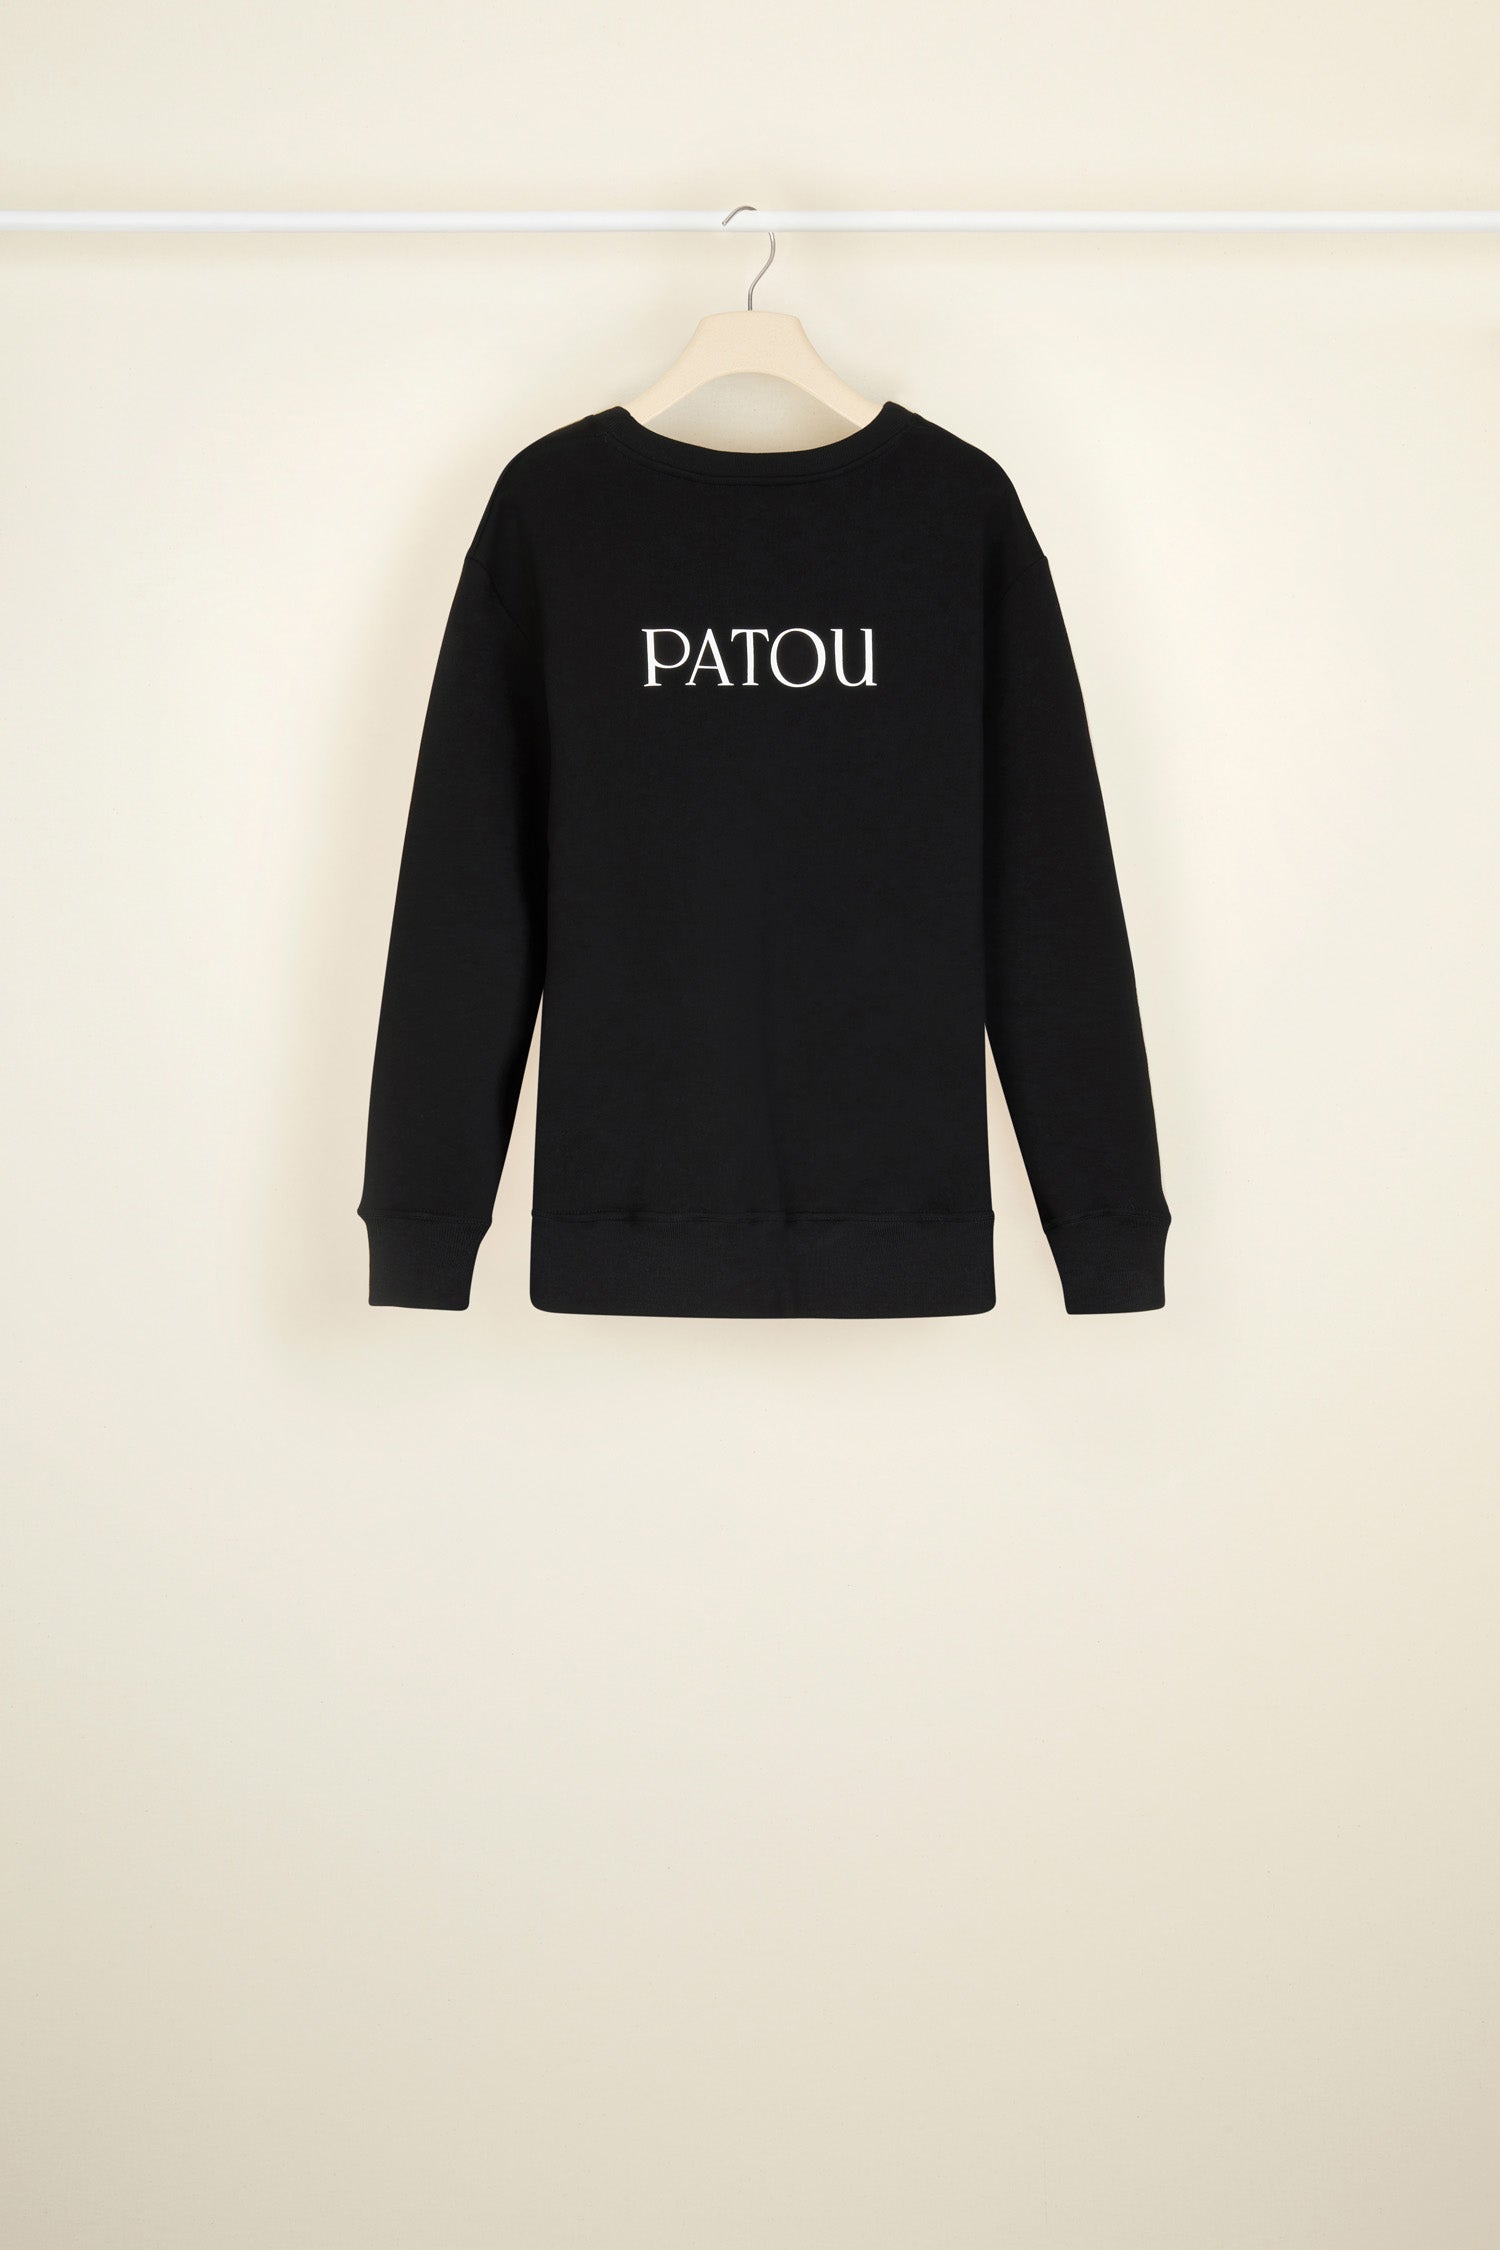 Patou | オーガニックコットン パトゥ スウェットシャツ